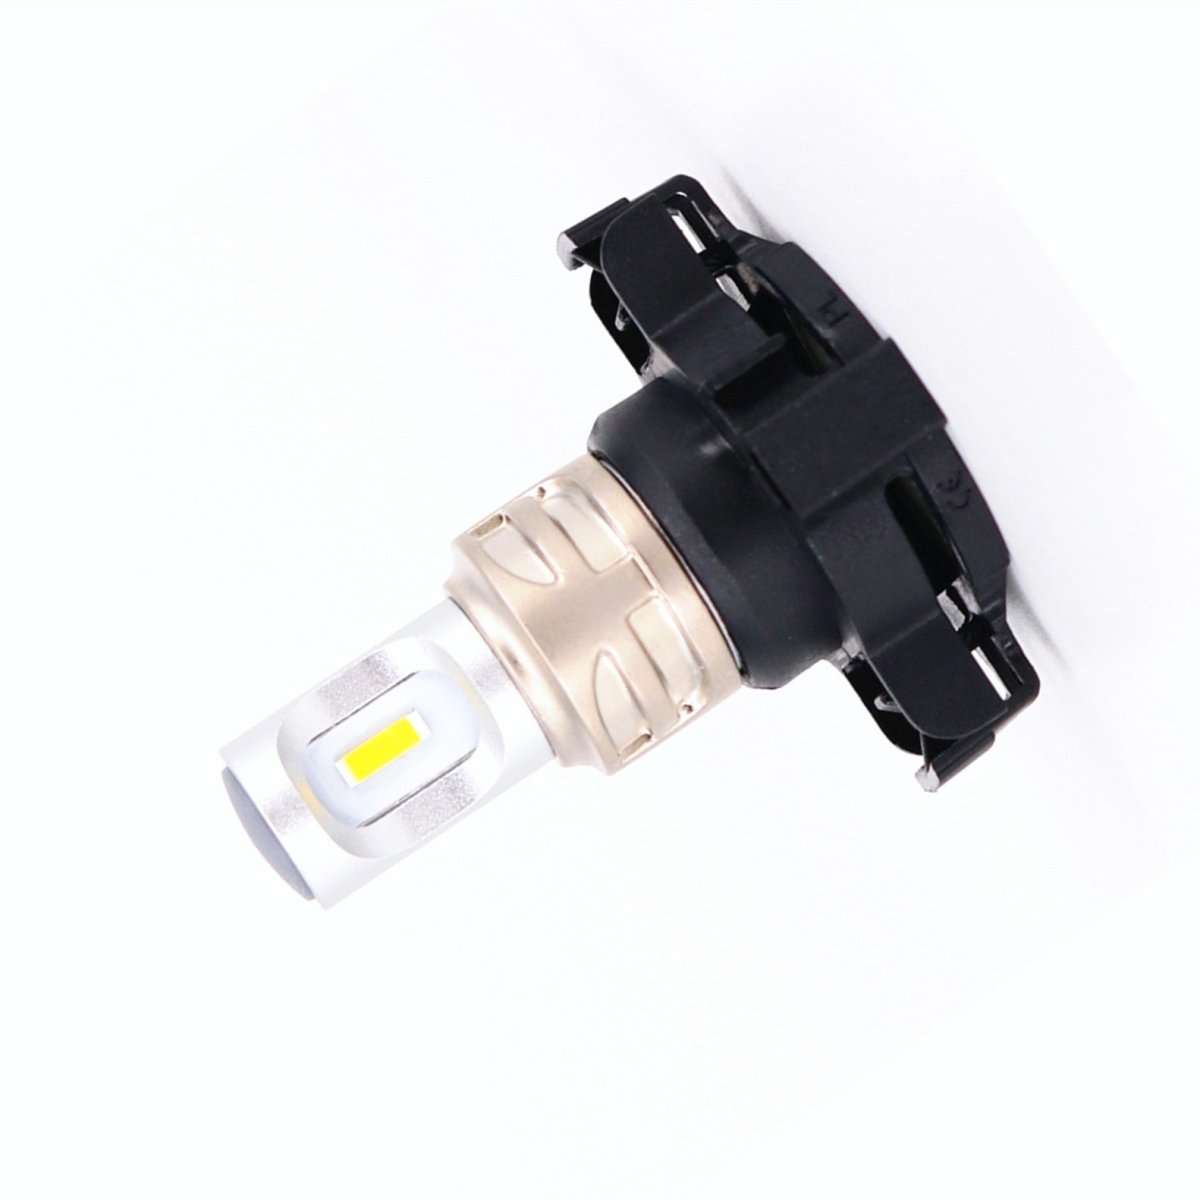 PGU20 5200 PY24W LED Turn Signal Lights Bulbs for BMW, Audi, Yellow -Alla Lighting